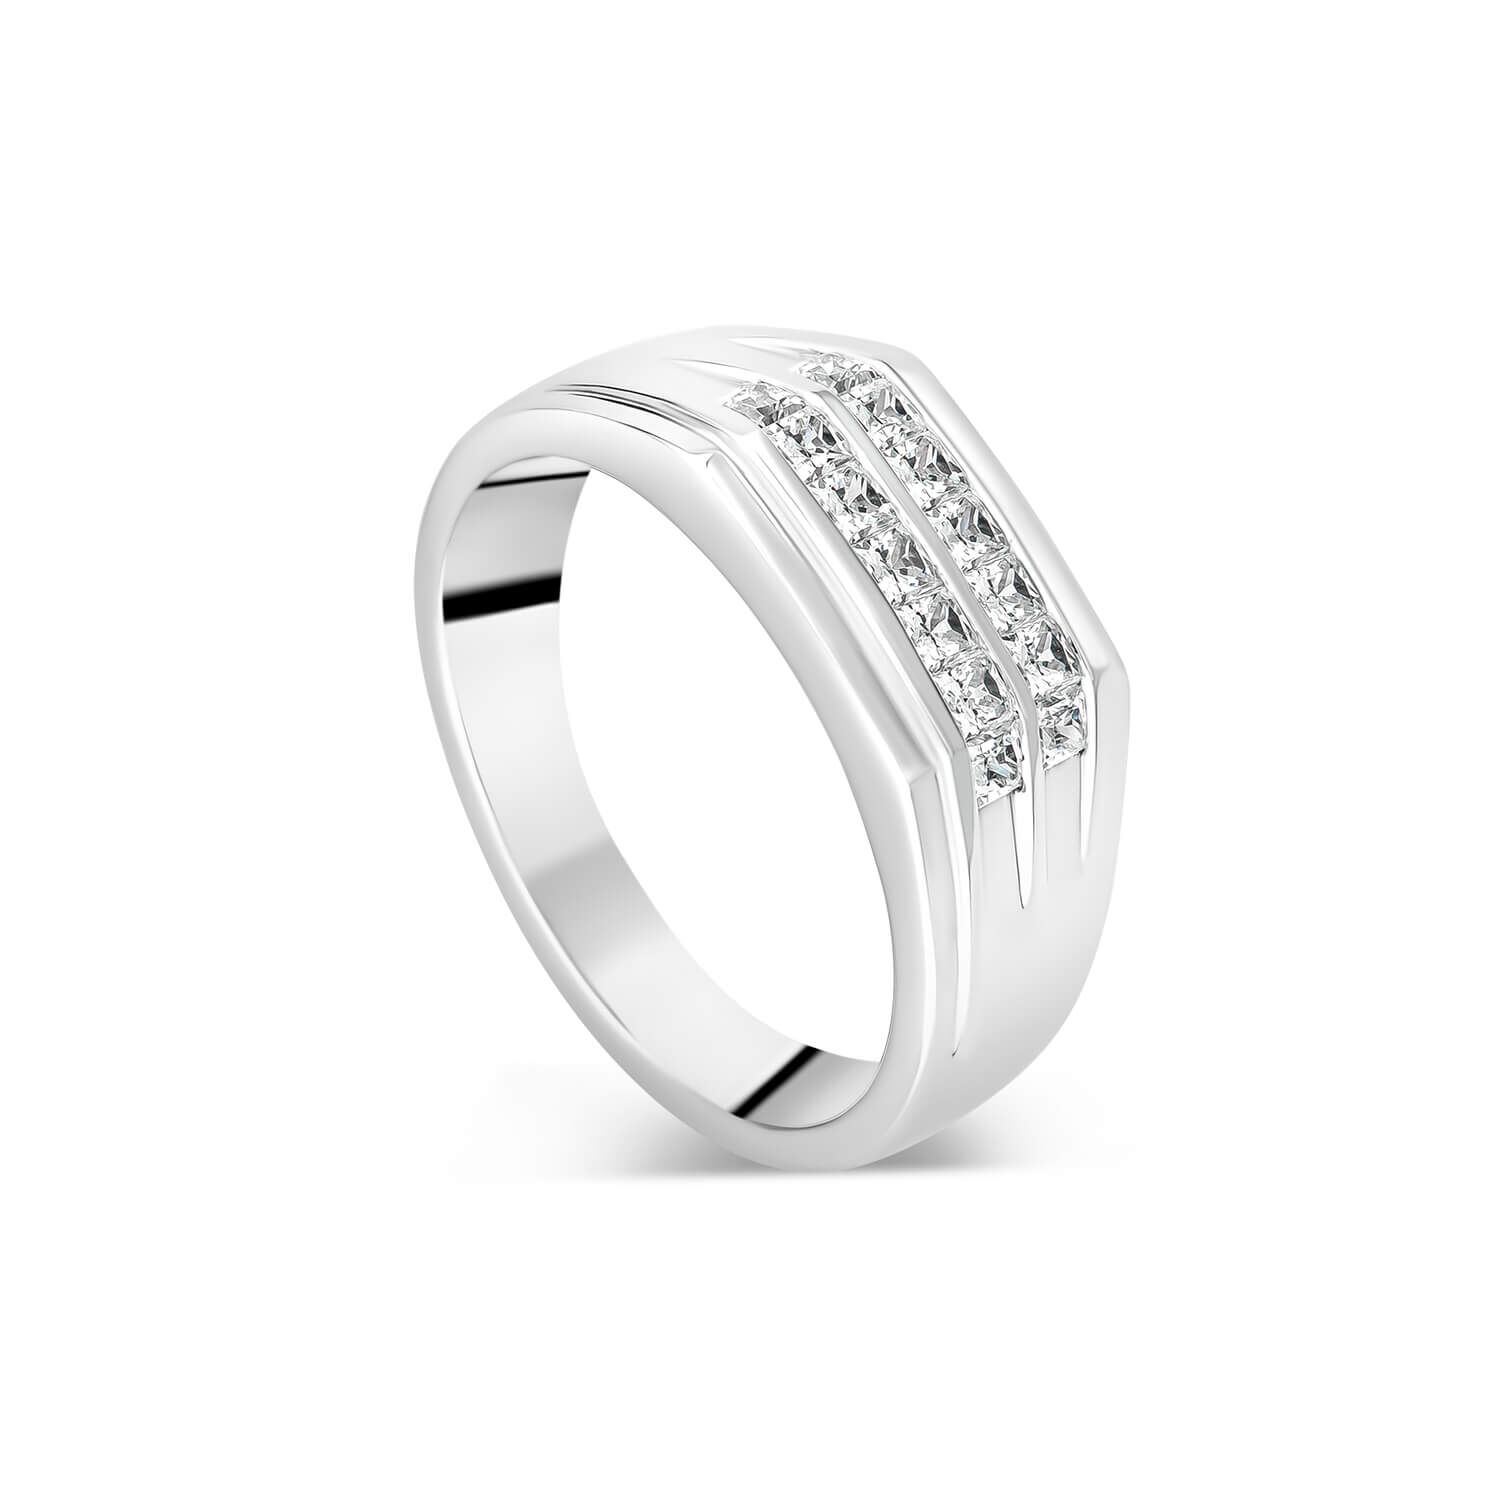 NEIGHBORHOOD SILVER PLAIN RING 指輪 19号 販売の値下げ メンズ